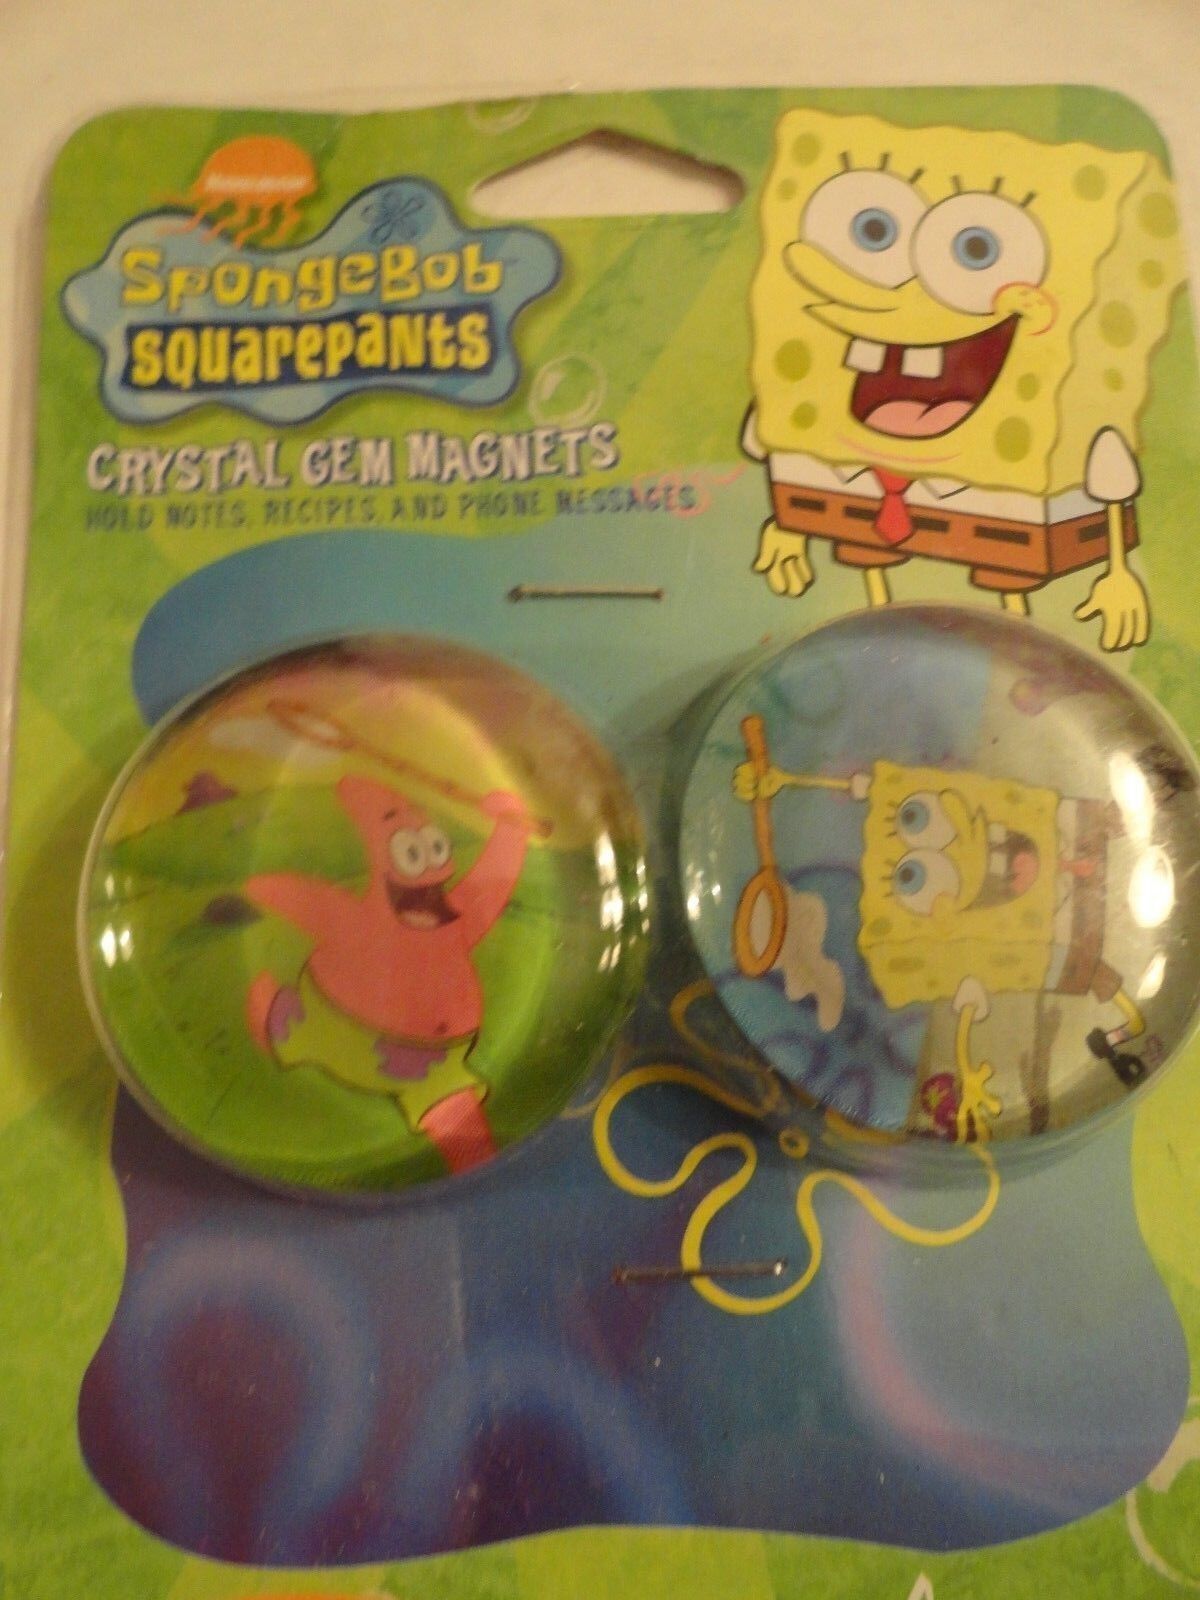 Spongebob Squarepants Crystal Gem Magnets